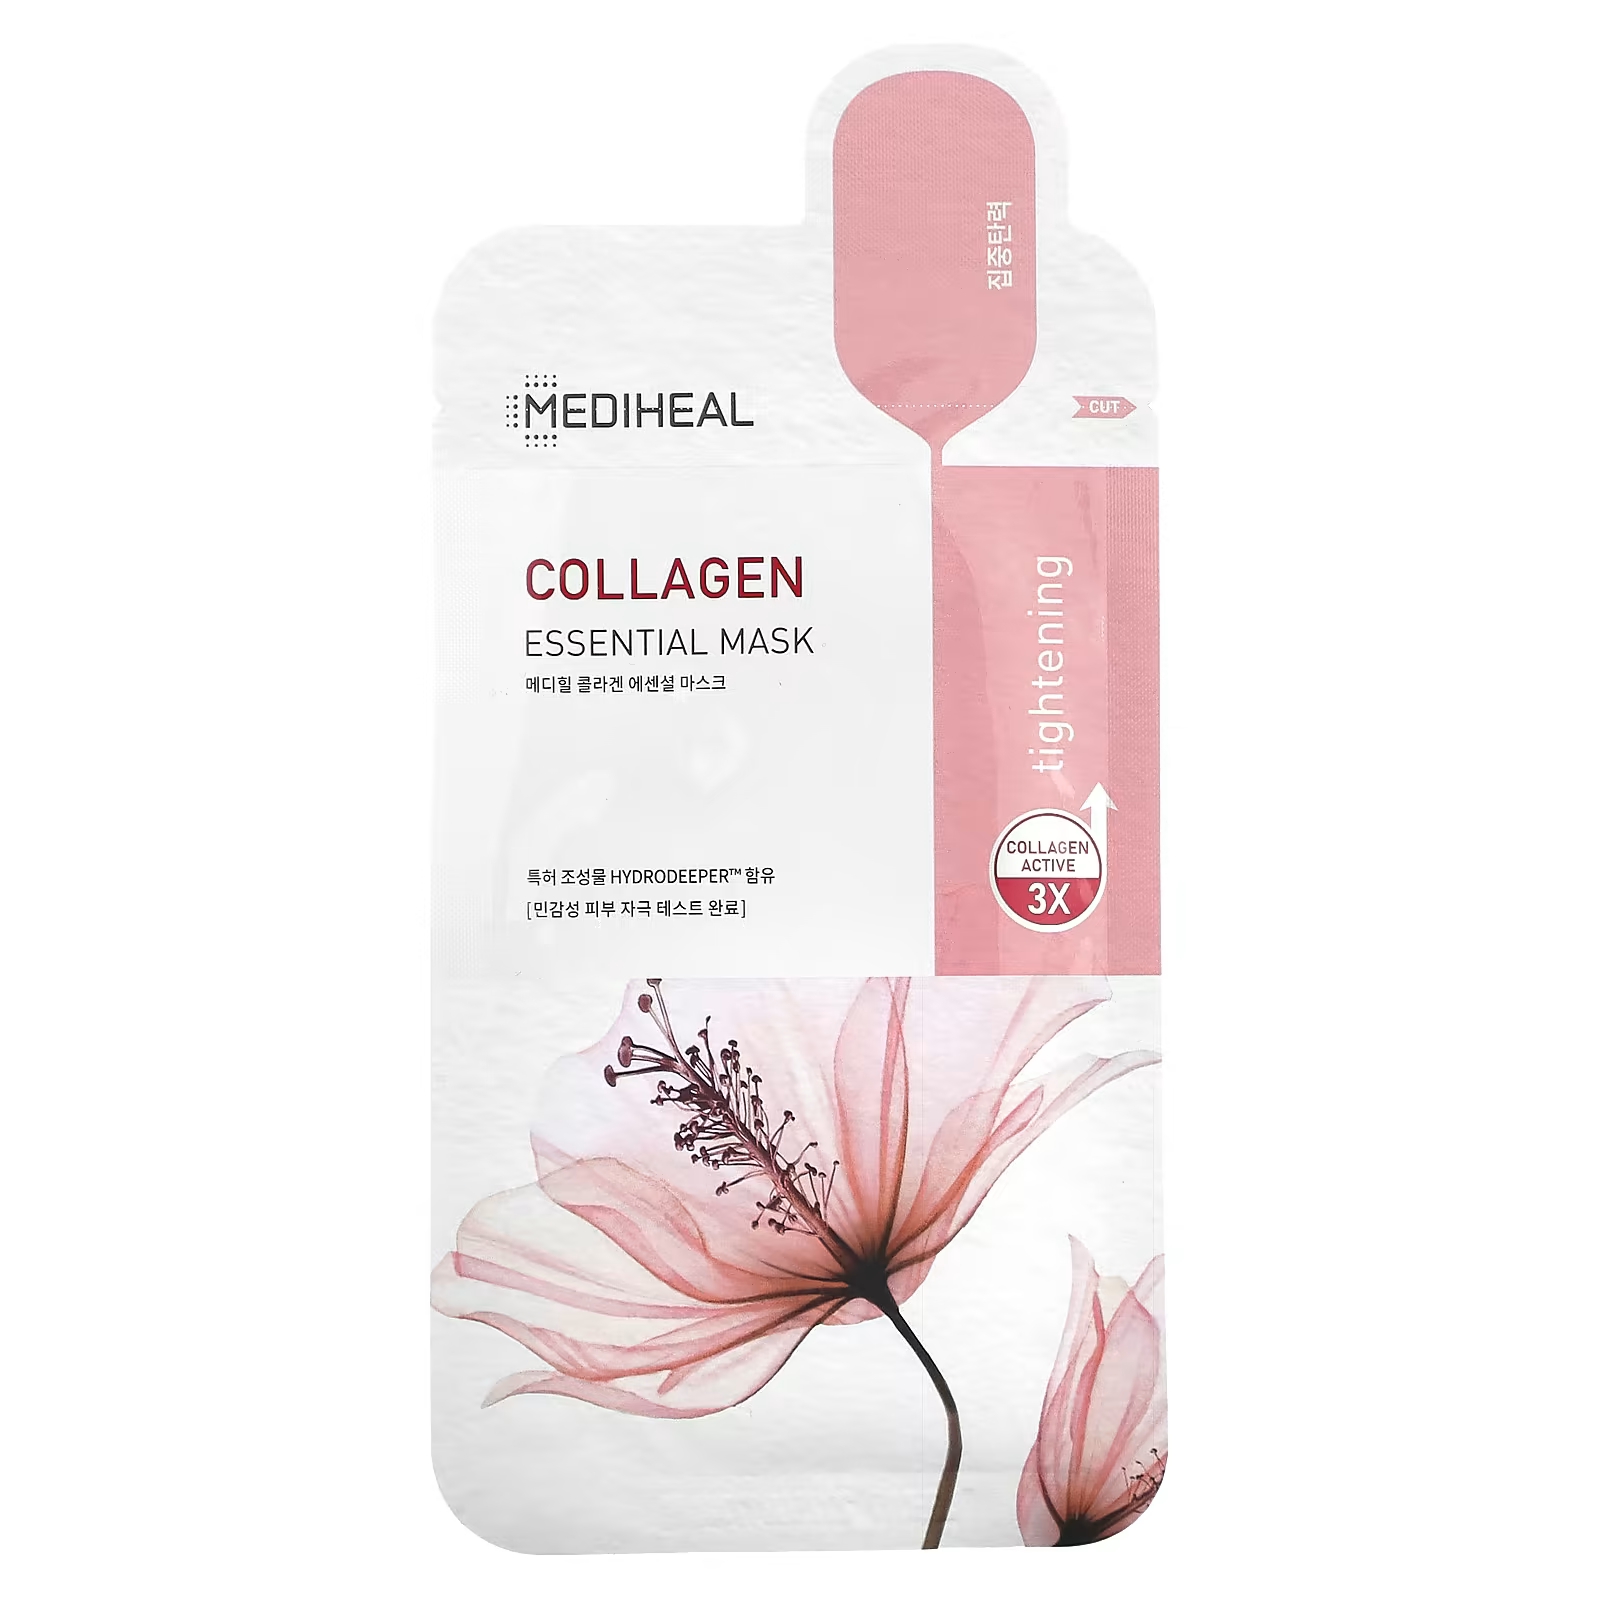 MEDIHEAL Collagen Essential Beauty Mask, 1 лист, 0,81 жидк. унции (24 мл) mediheal madecassoside essential beauty mask 4 шт по 24 мл 0 81 жидк унции